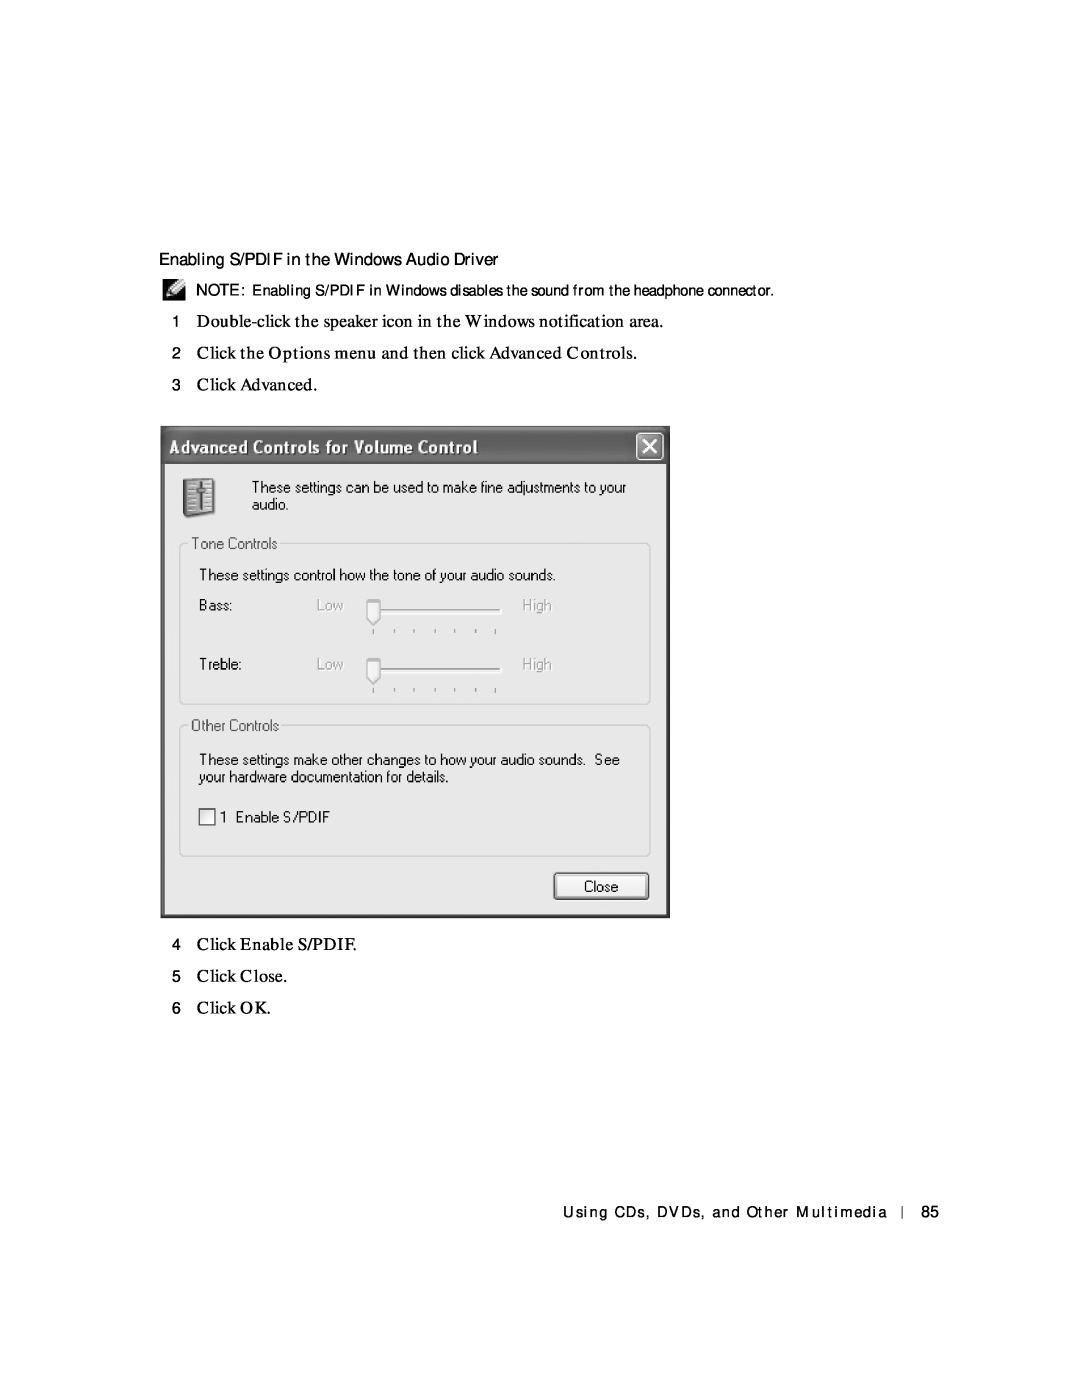 Dell 8600 manual Enabling S/PDIF in the Windows Audio Driver, Click Advanced 4 Click Enable S/PDIF, Click Close 6 Click OK 